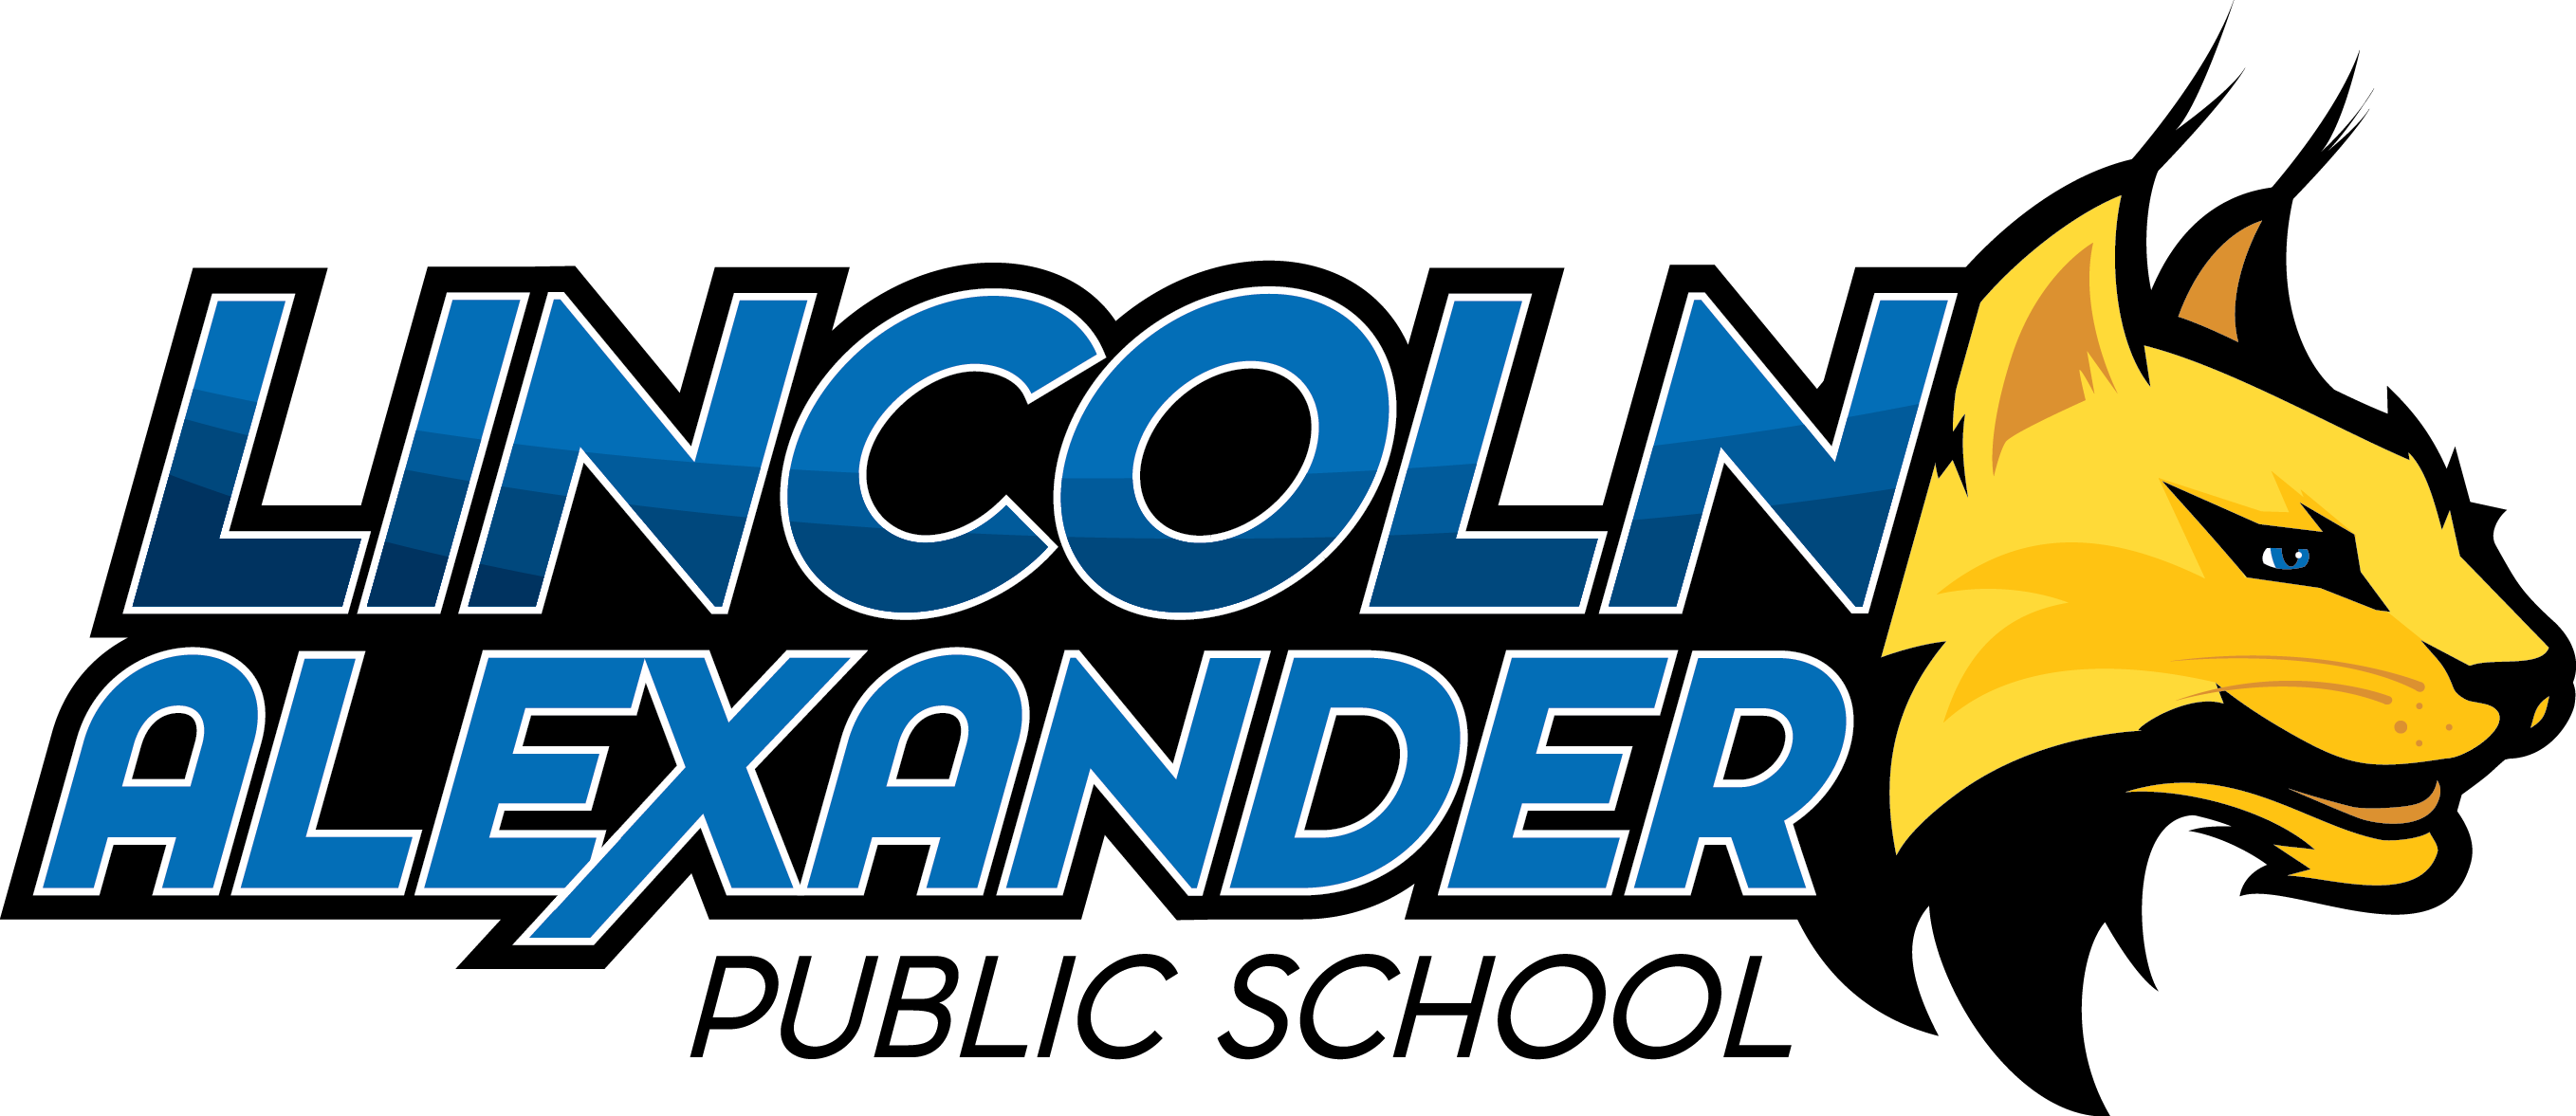 Lincoln Alexander Public School logo